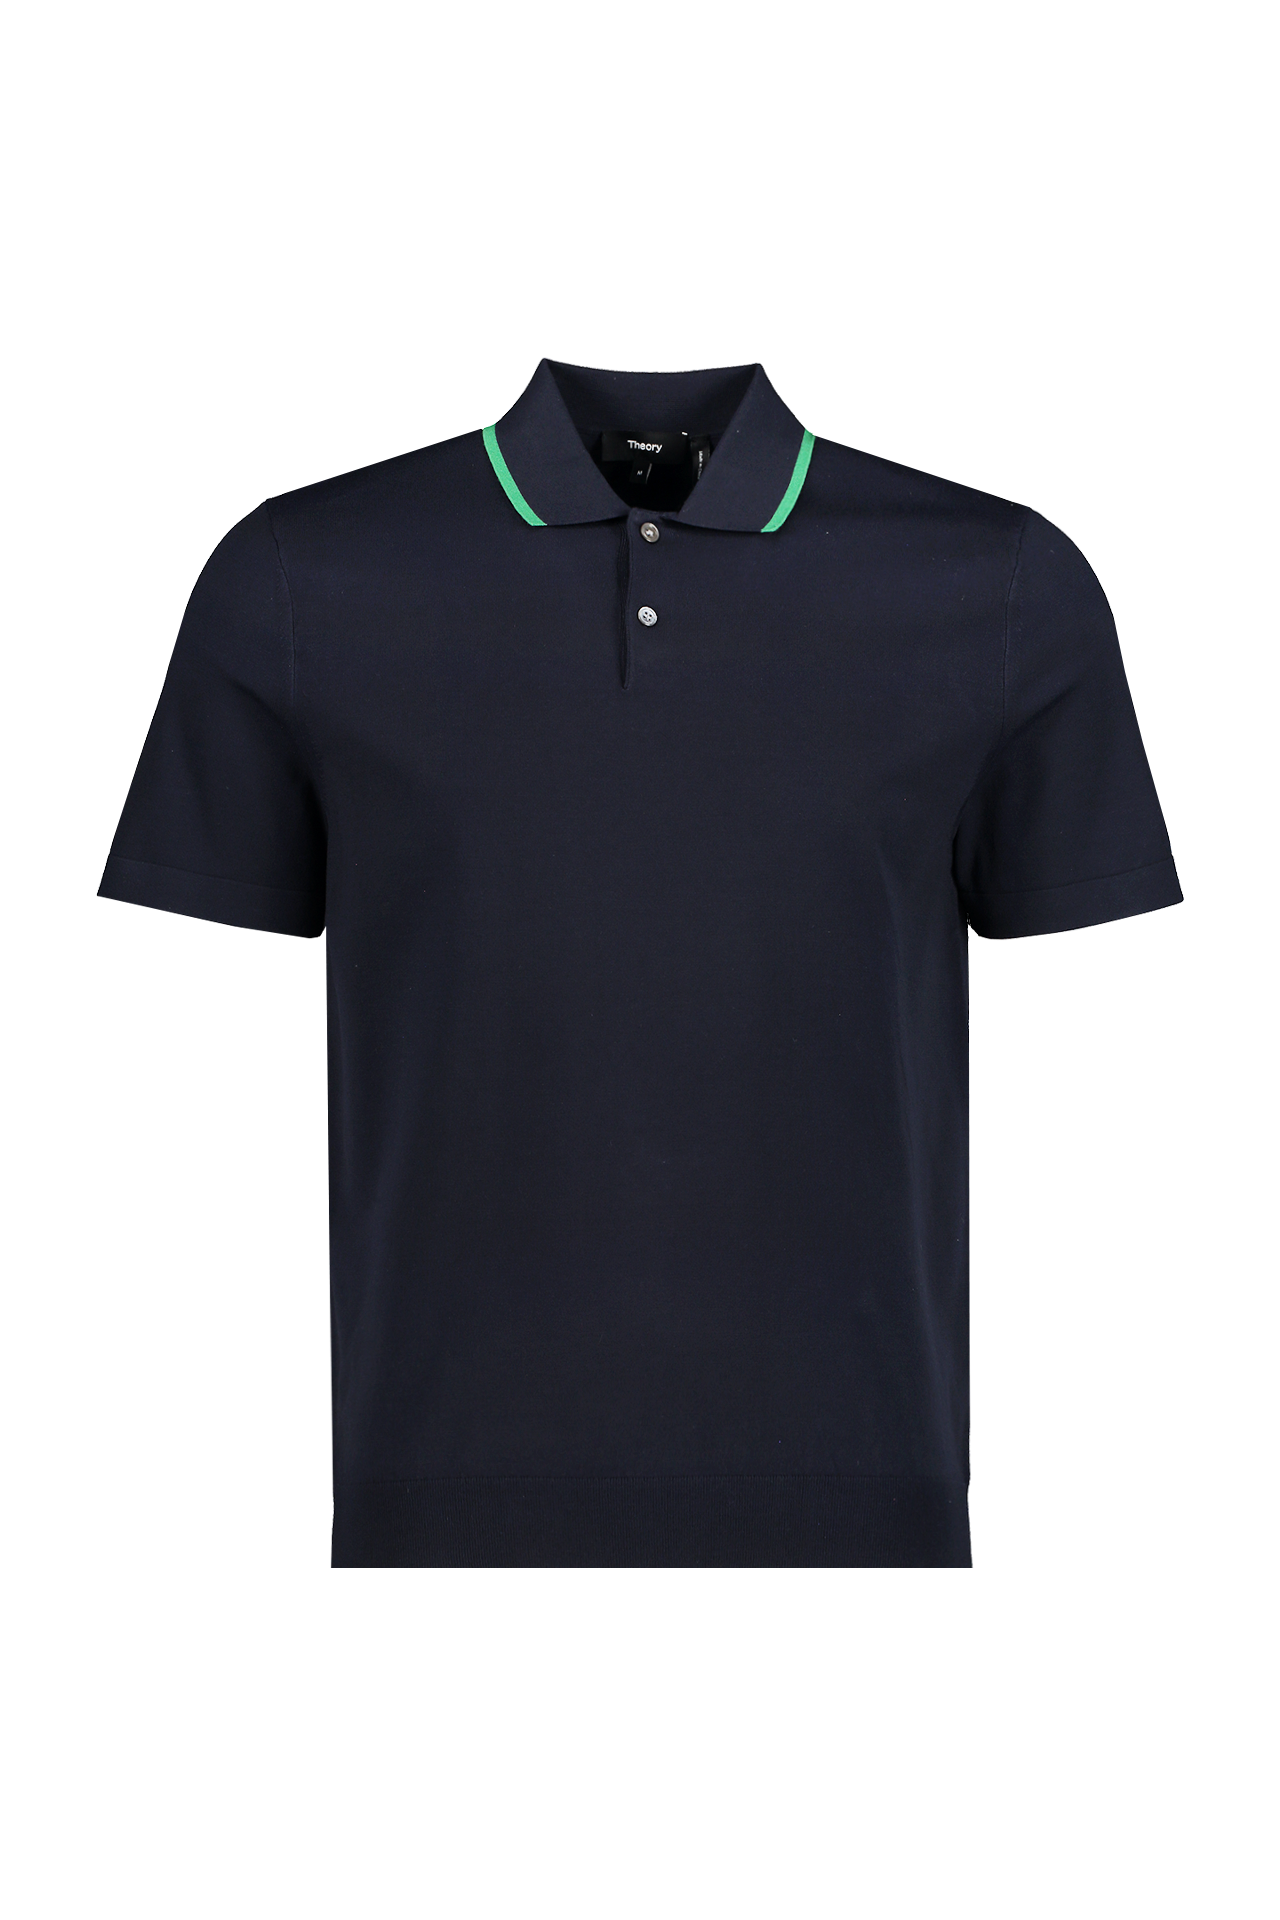 Goris Polo Shirt in Fine Bilen (7109028249715)